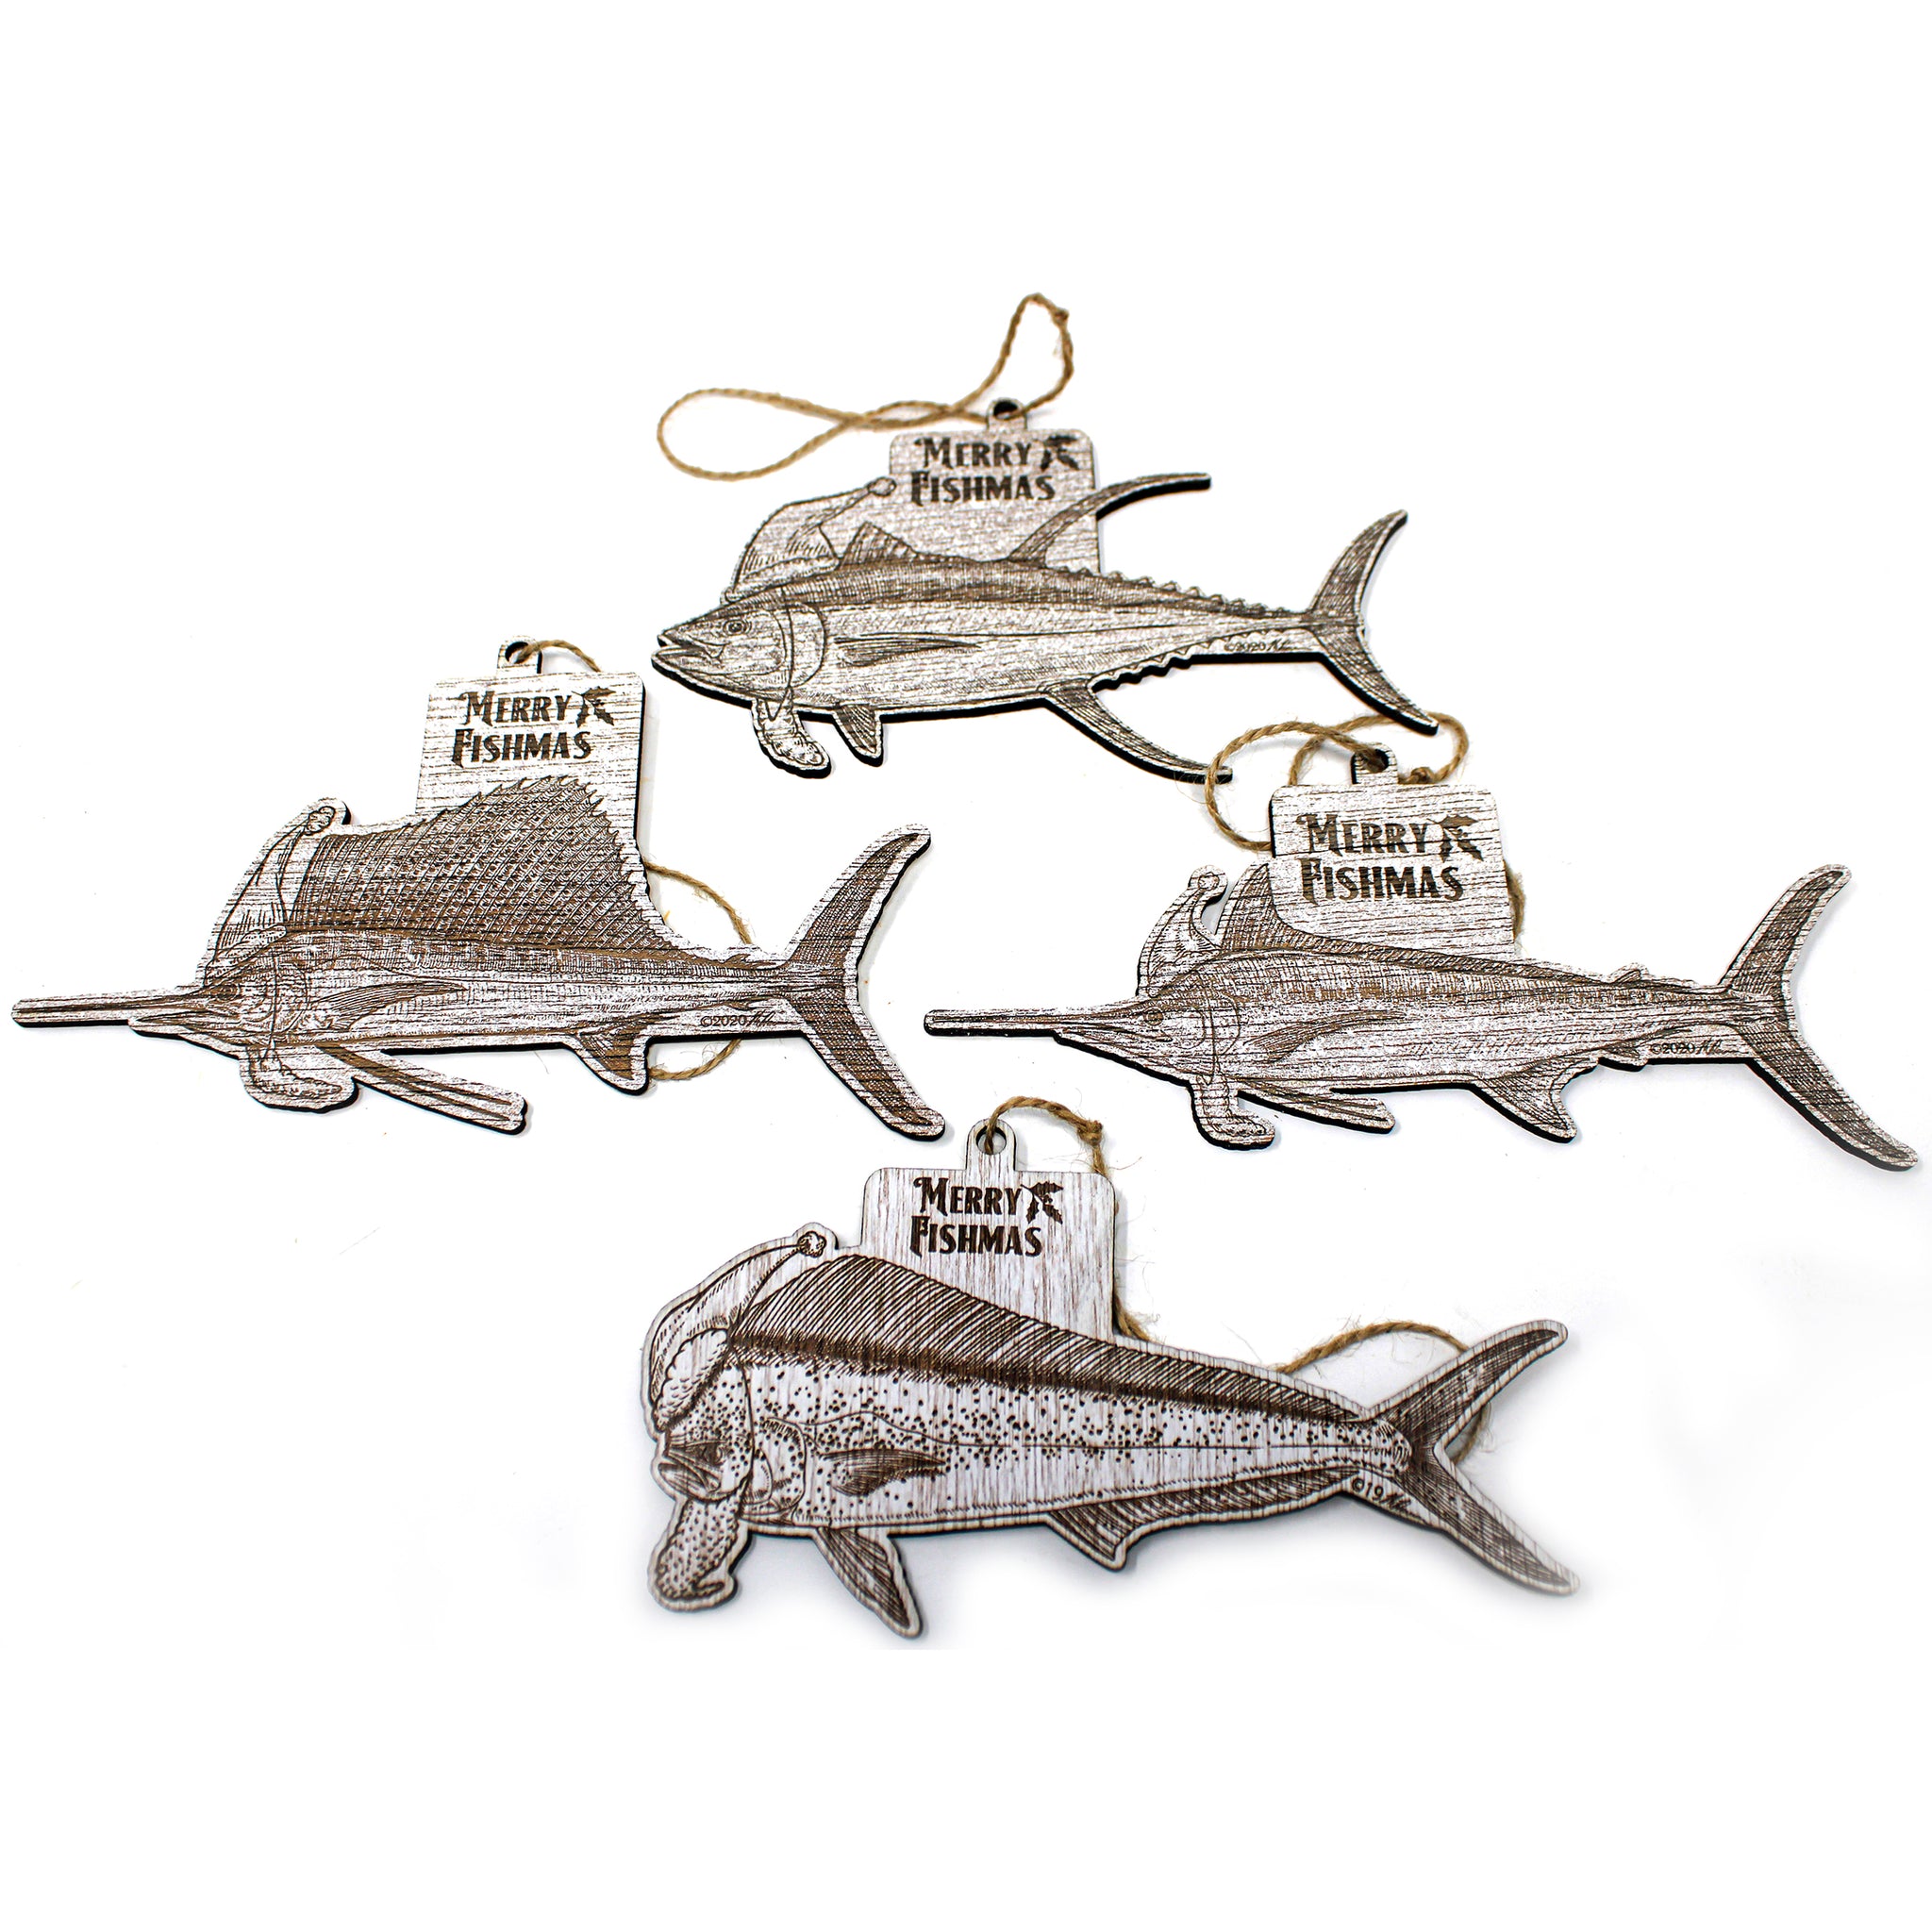 Wood Christmas Ornaments - Offshore Slam Fishmas Ornaments